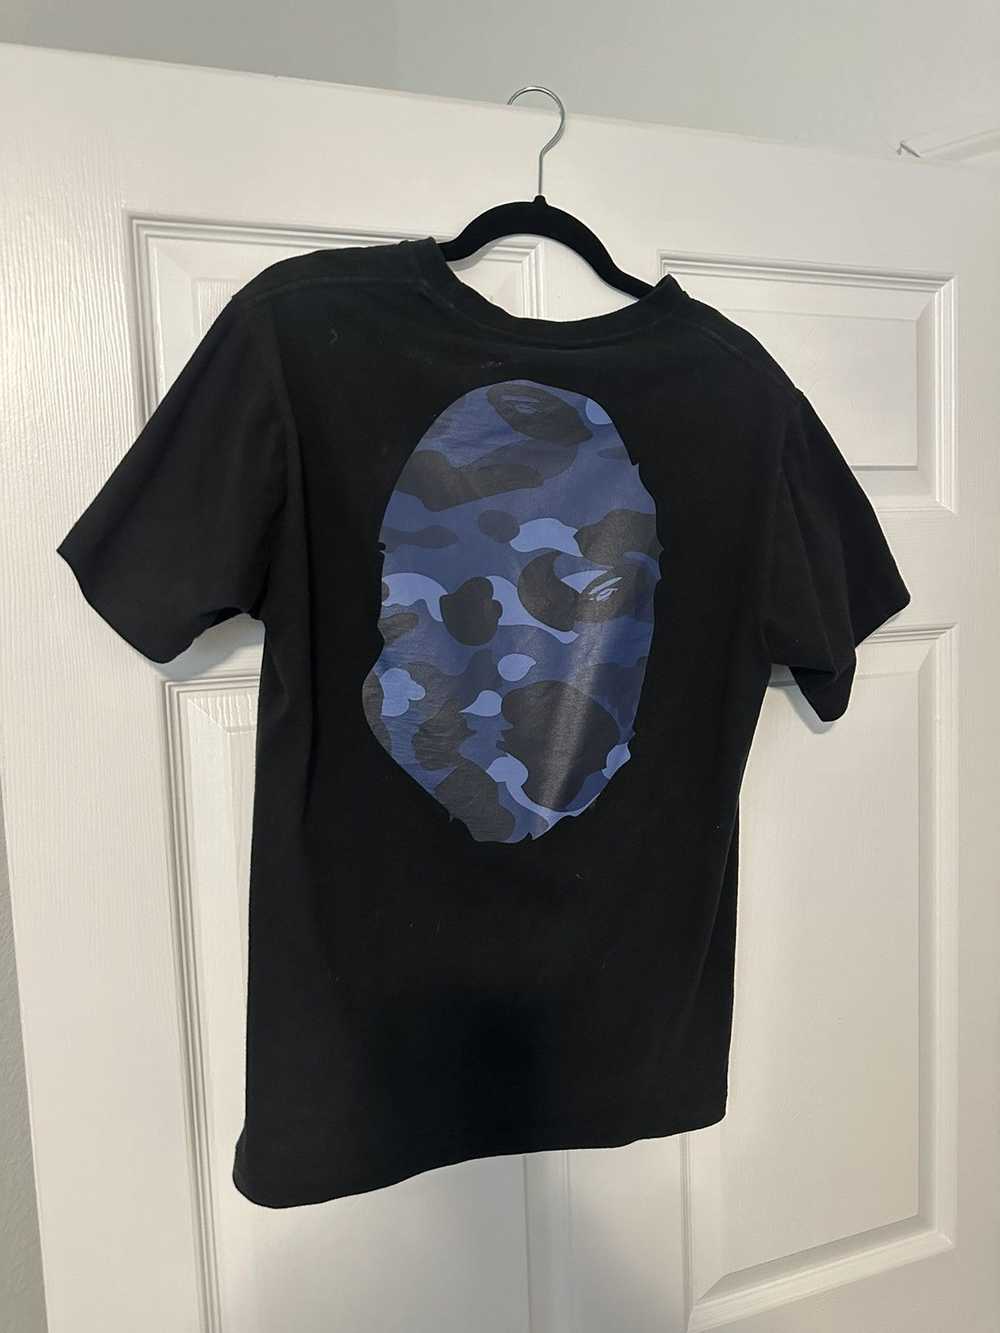 Bape Bape T-Shirt Black/Blue Camo - image 2